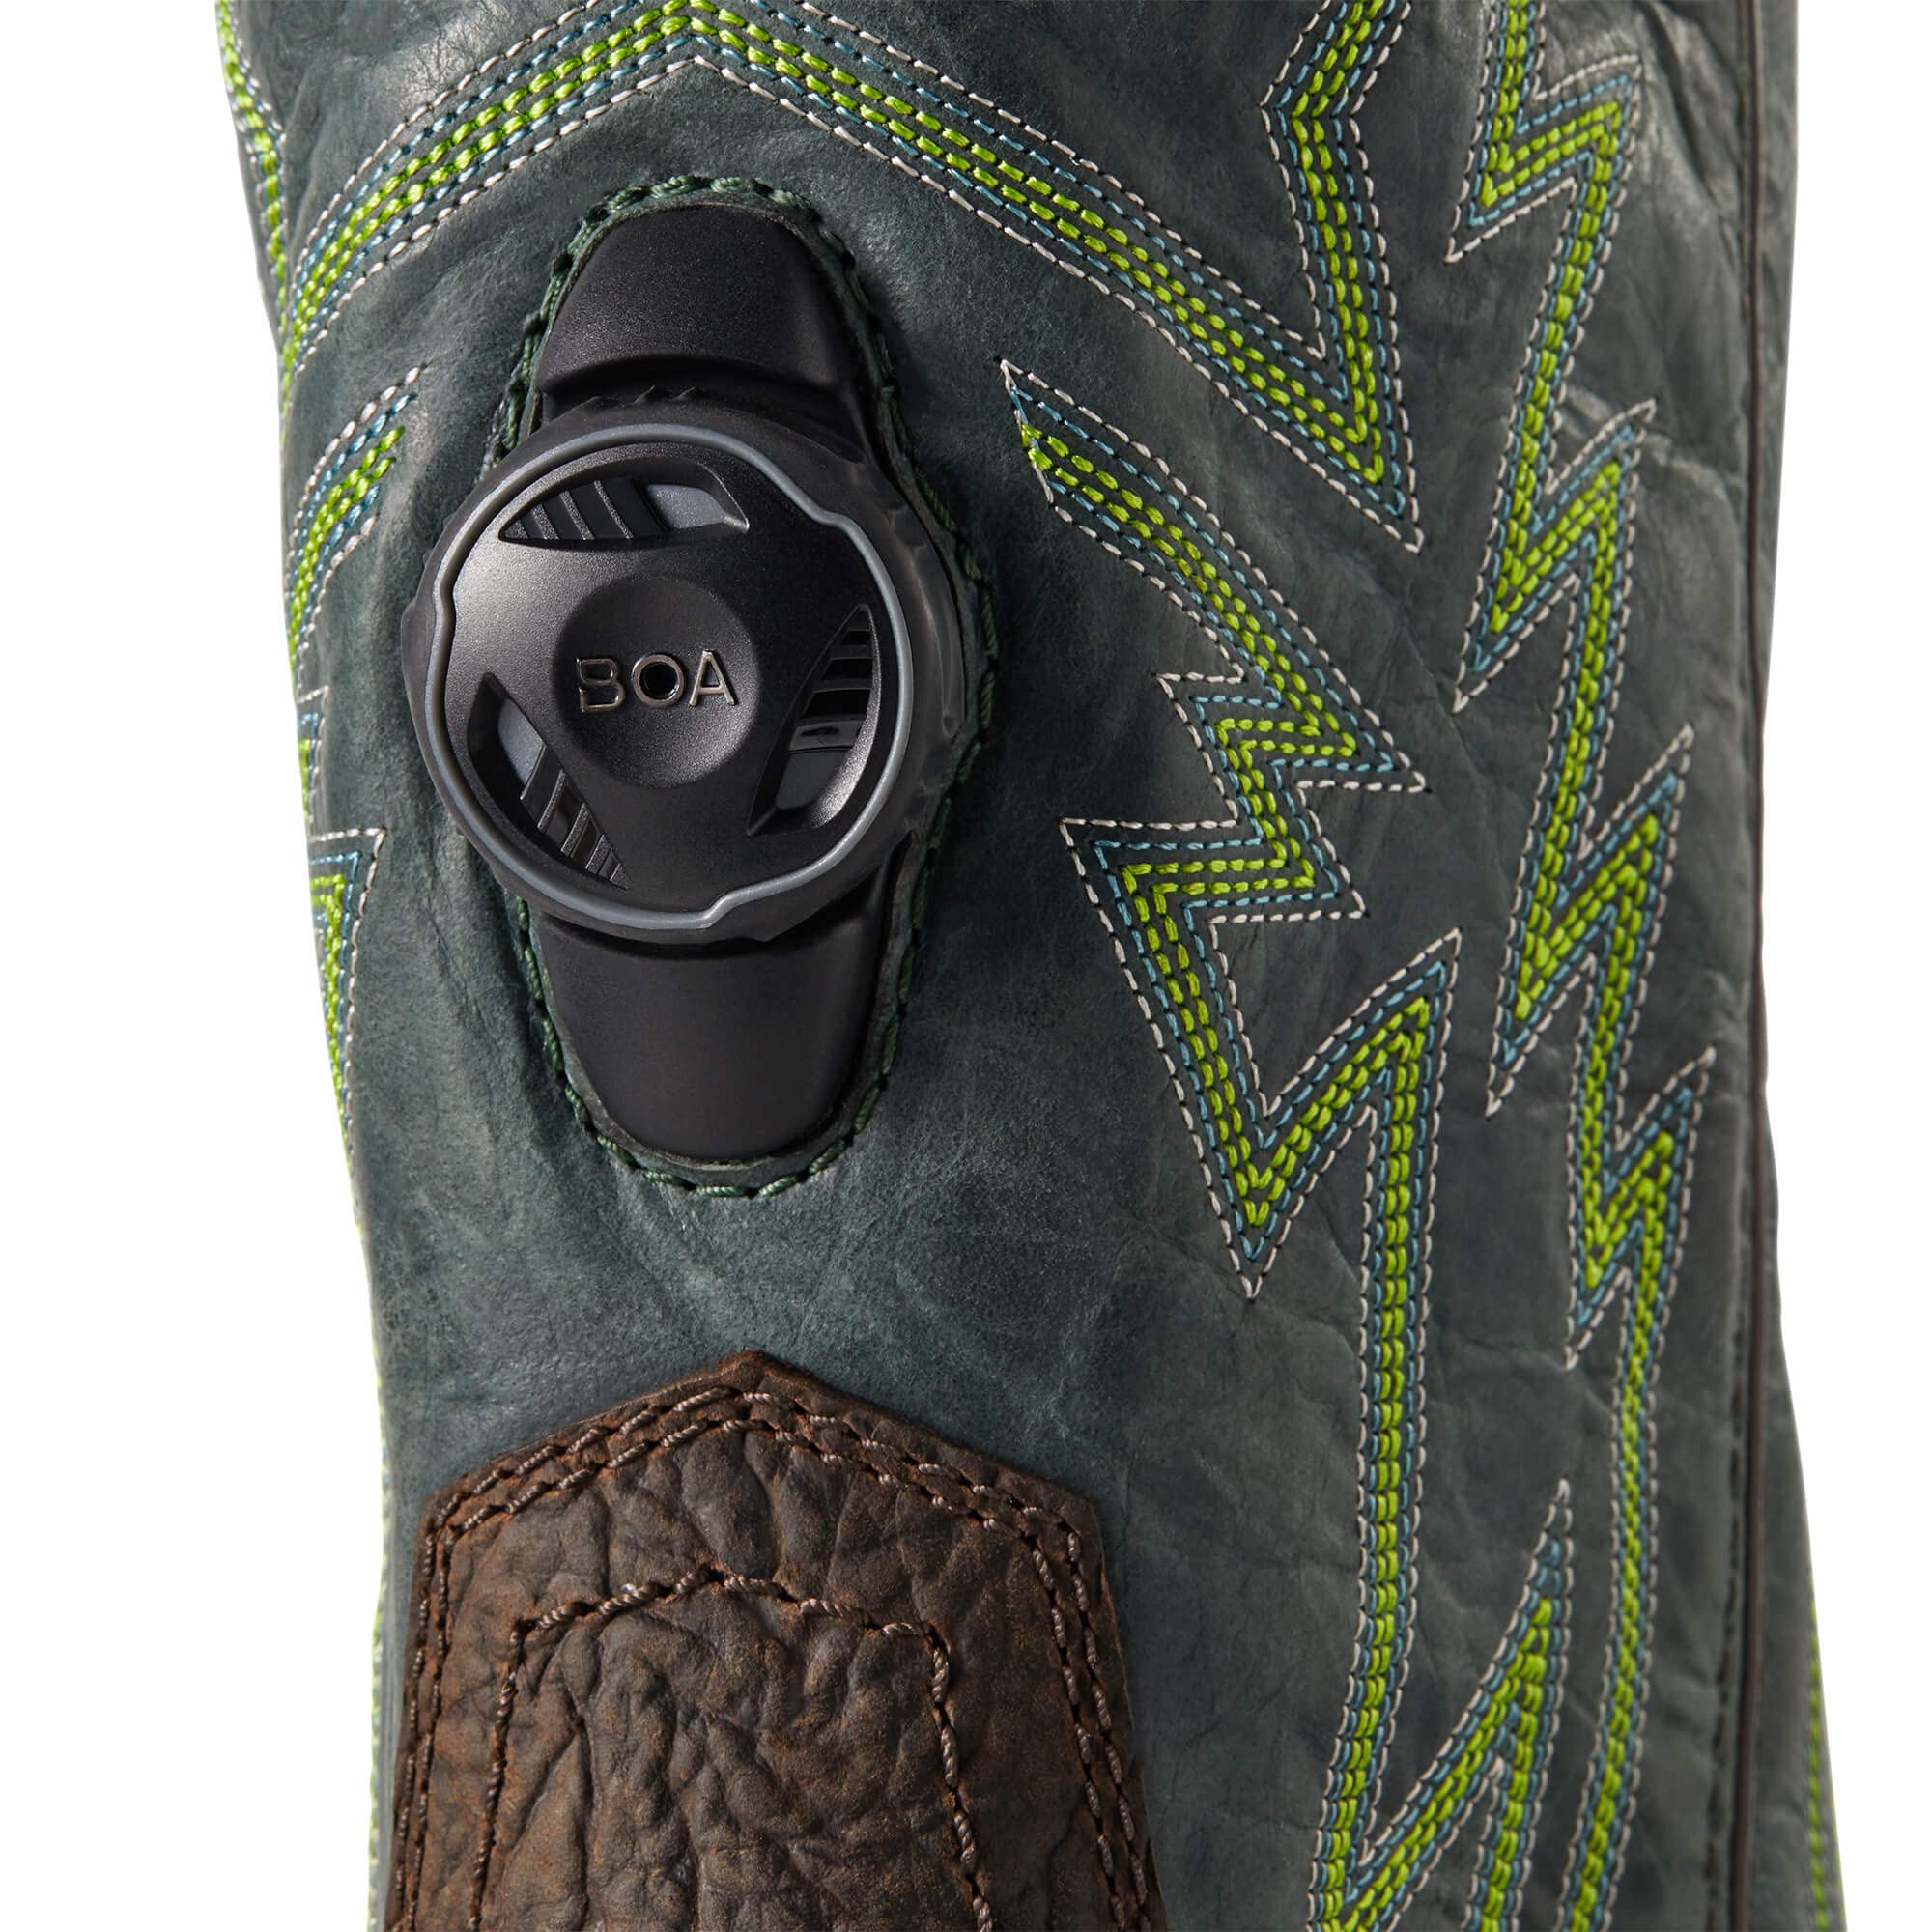 ARIAT Men's Workhog Xt Boa Waterproof Carbon Toe Work Boot Western